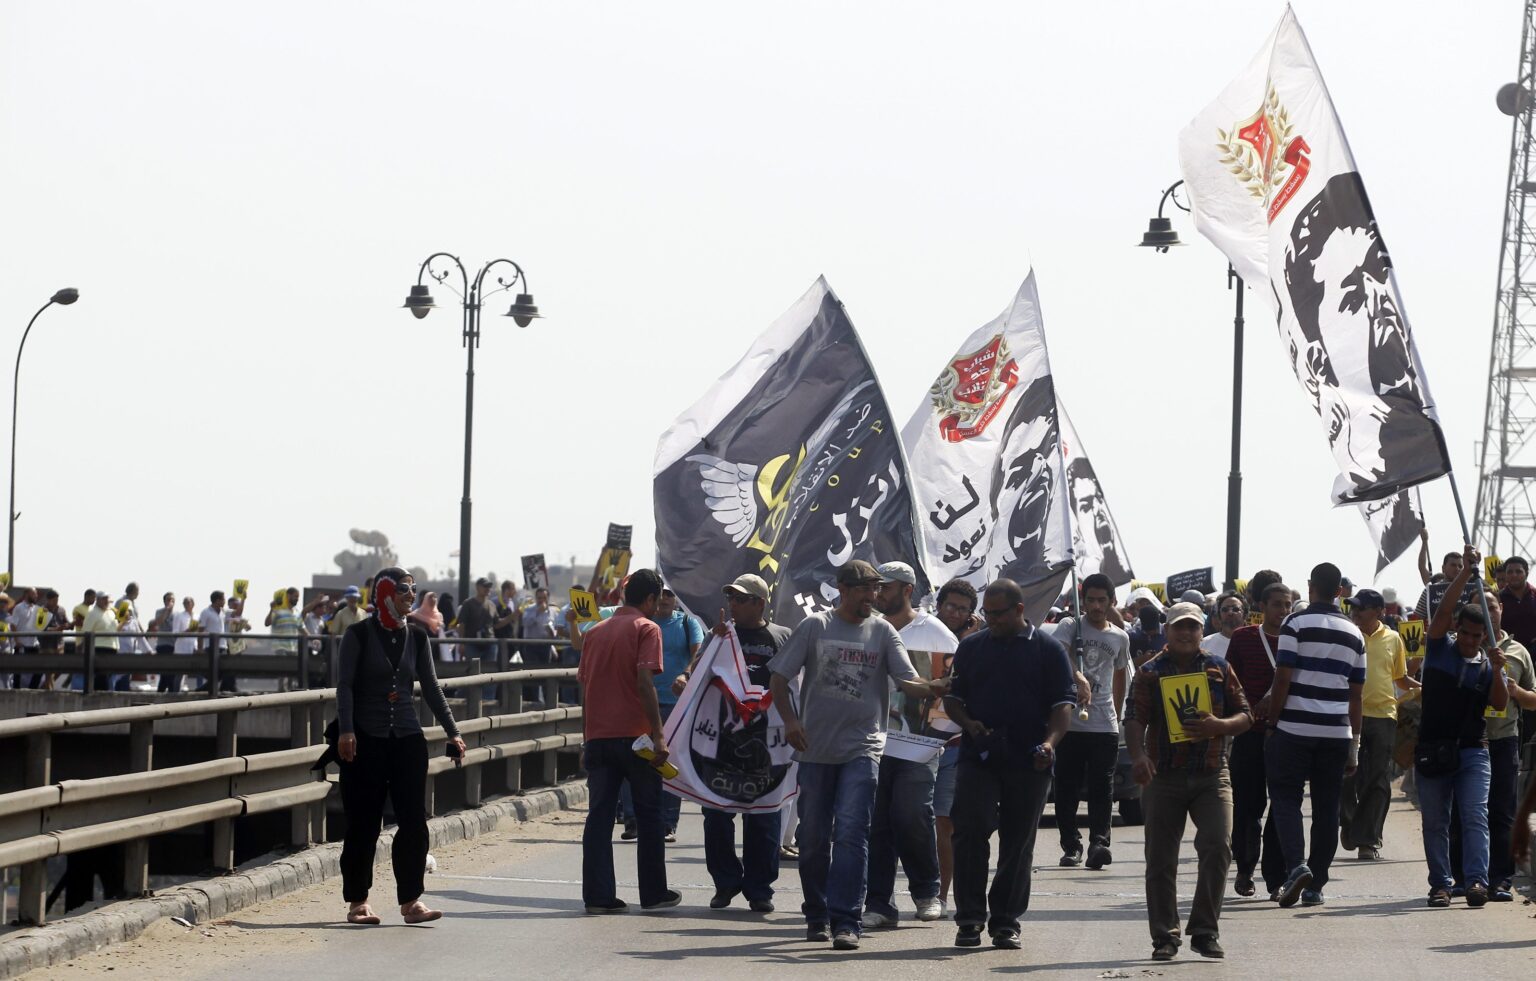 2013-09-06T152414Z_1216262654_GM1E9961SBD01_RTRMADP_3_EGYPT-PROTESTS